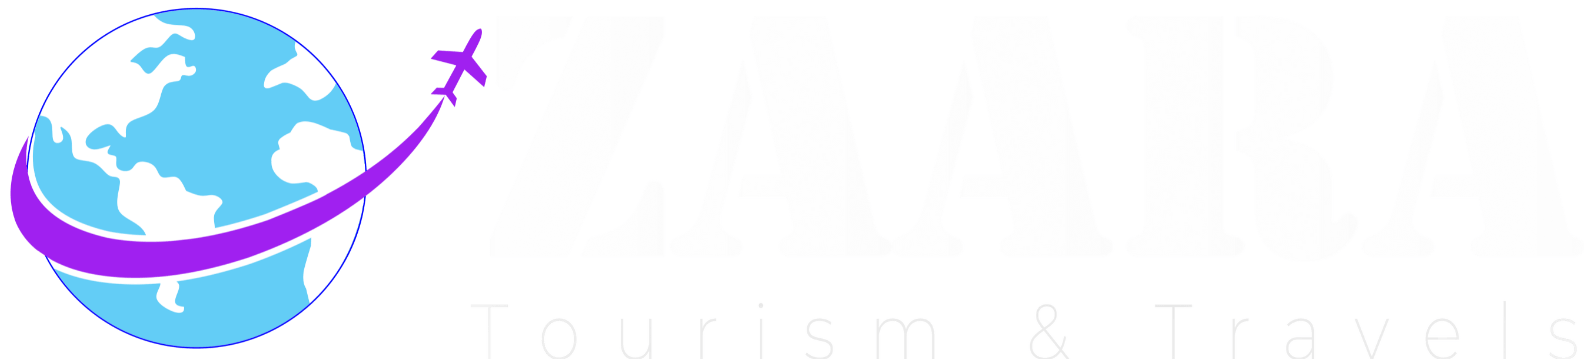 Zaara Logo white